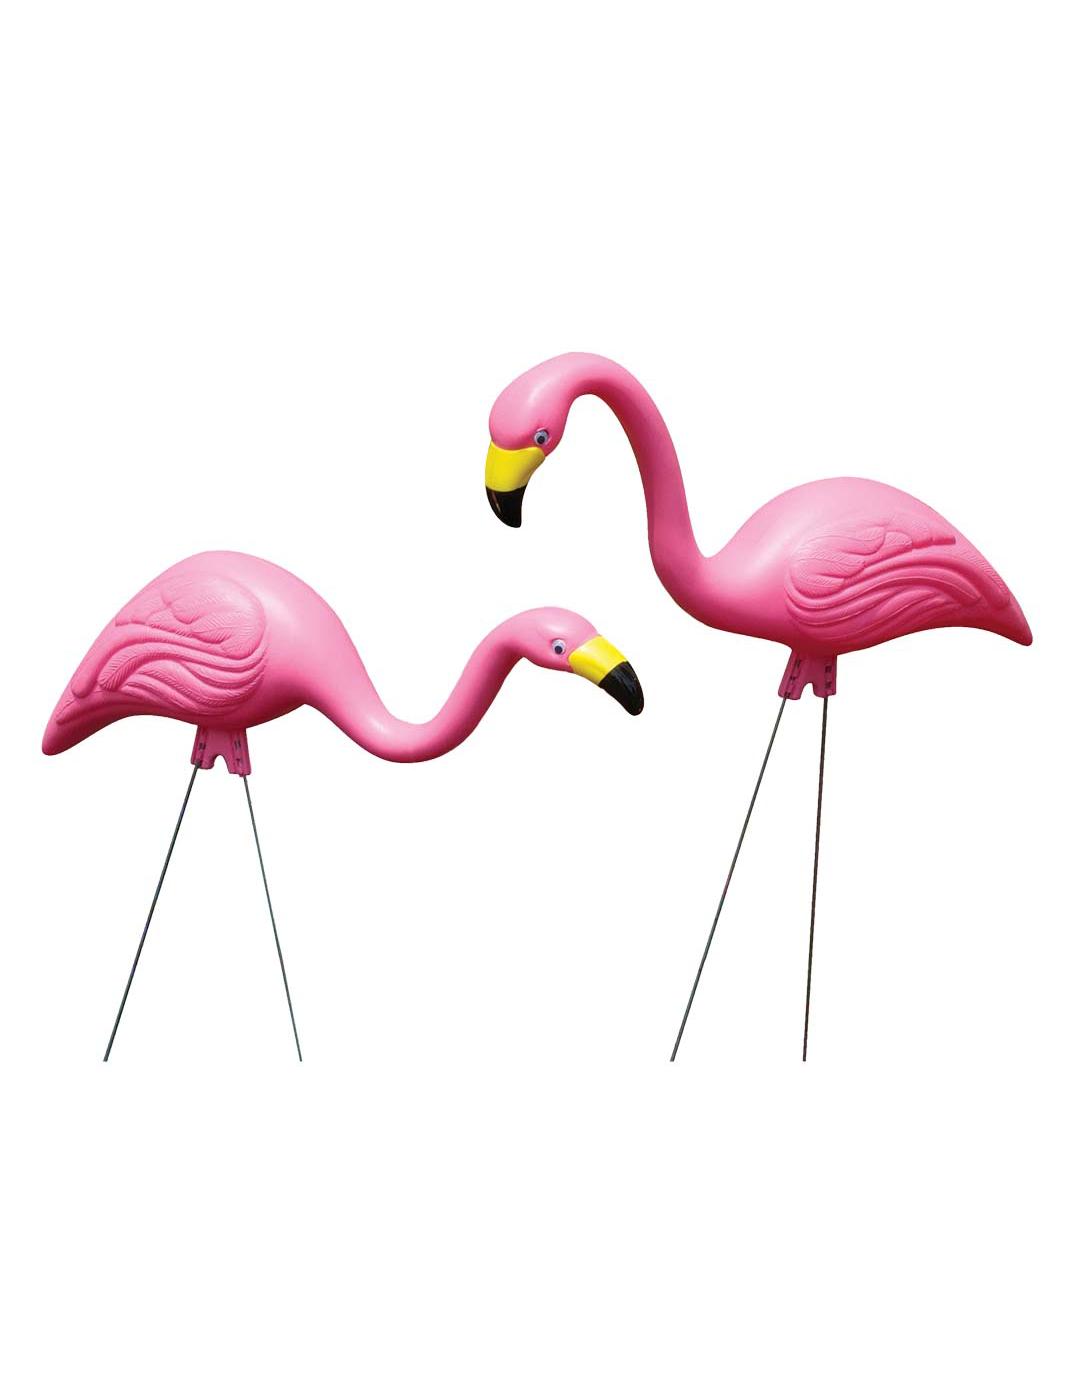 Bloem Pink Flamingos Garden Statues; image 1 of 2